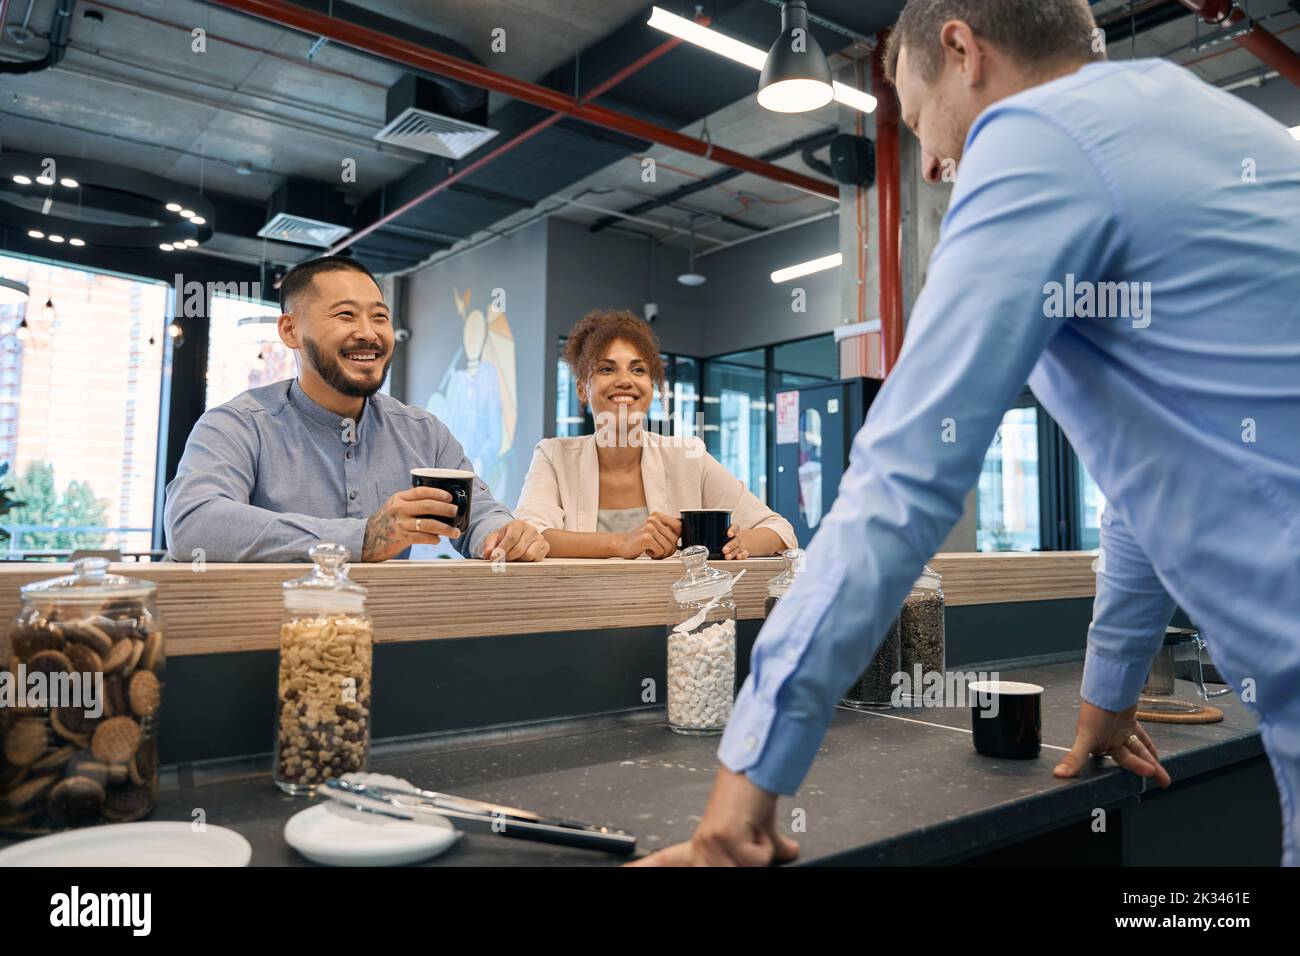 Three company employees enjoying their coffee break Stock Photo